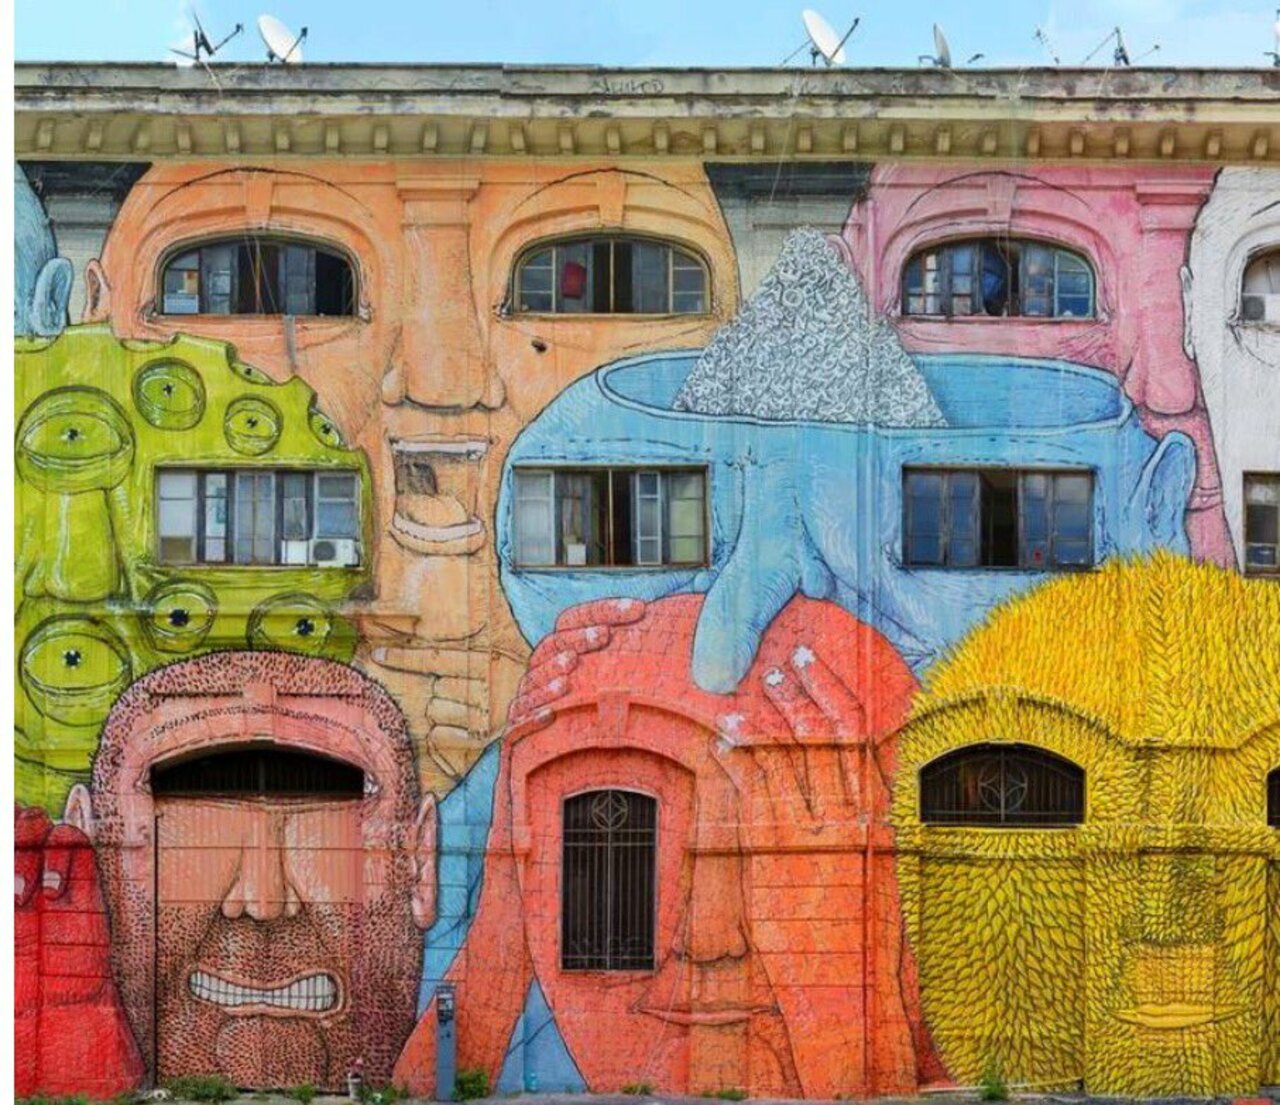 #switch #streetart by #blu turning windows into face in #rome #italy #graffiti #bedifferent #art #arte https://t.co/DoZDAFQNI0